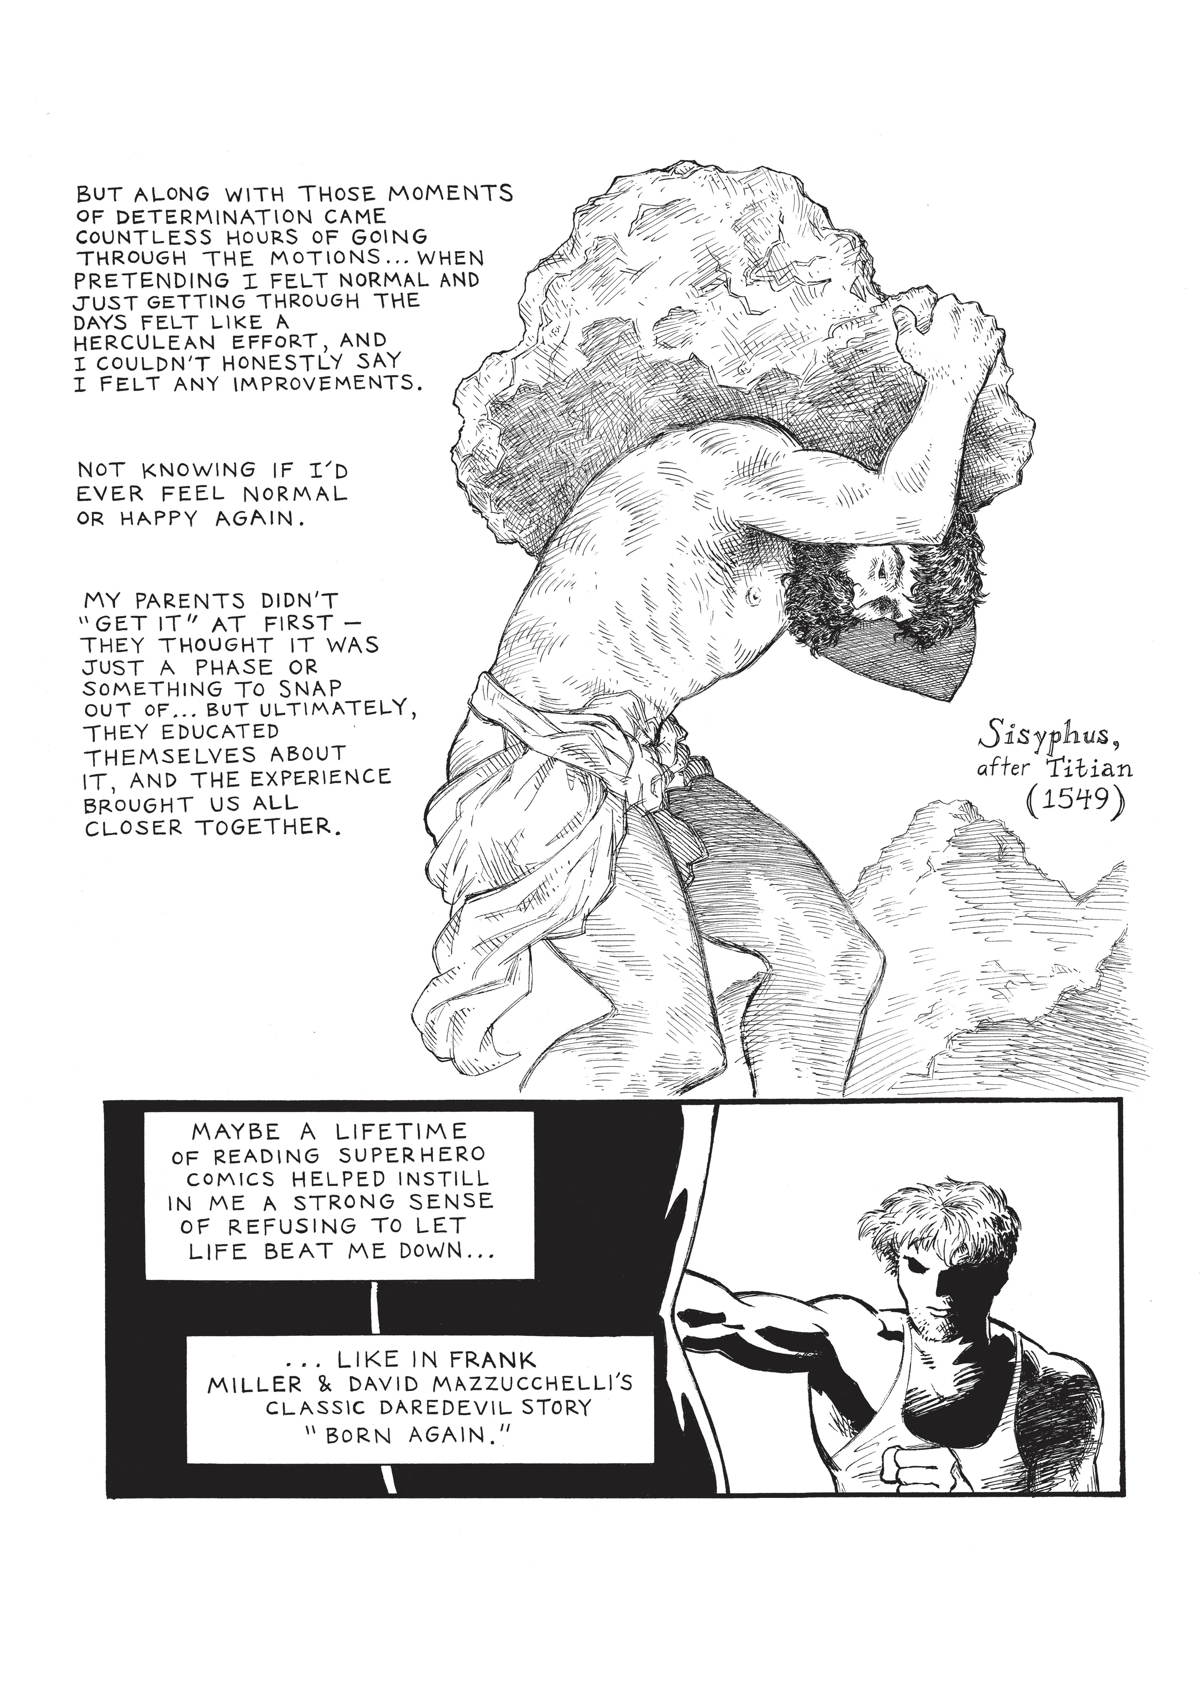 Tony Wolf Depression Comic p5 (1)